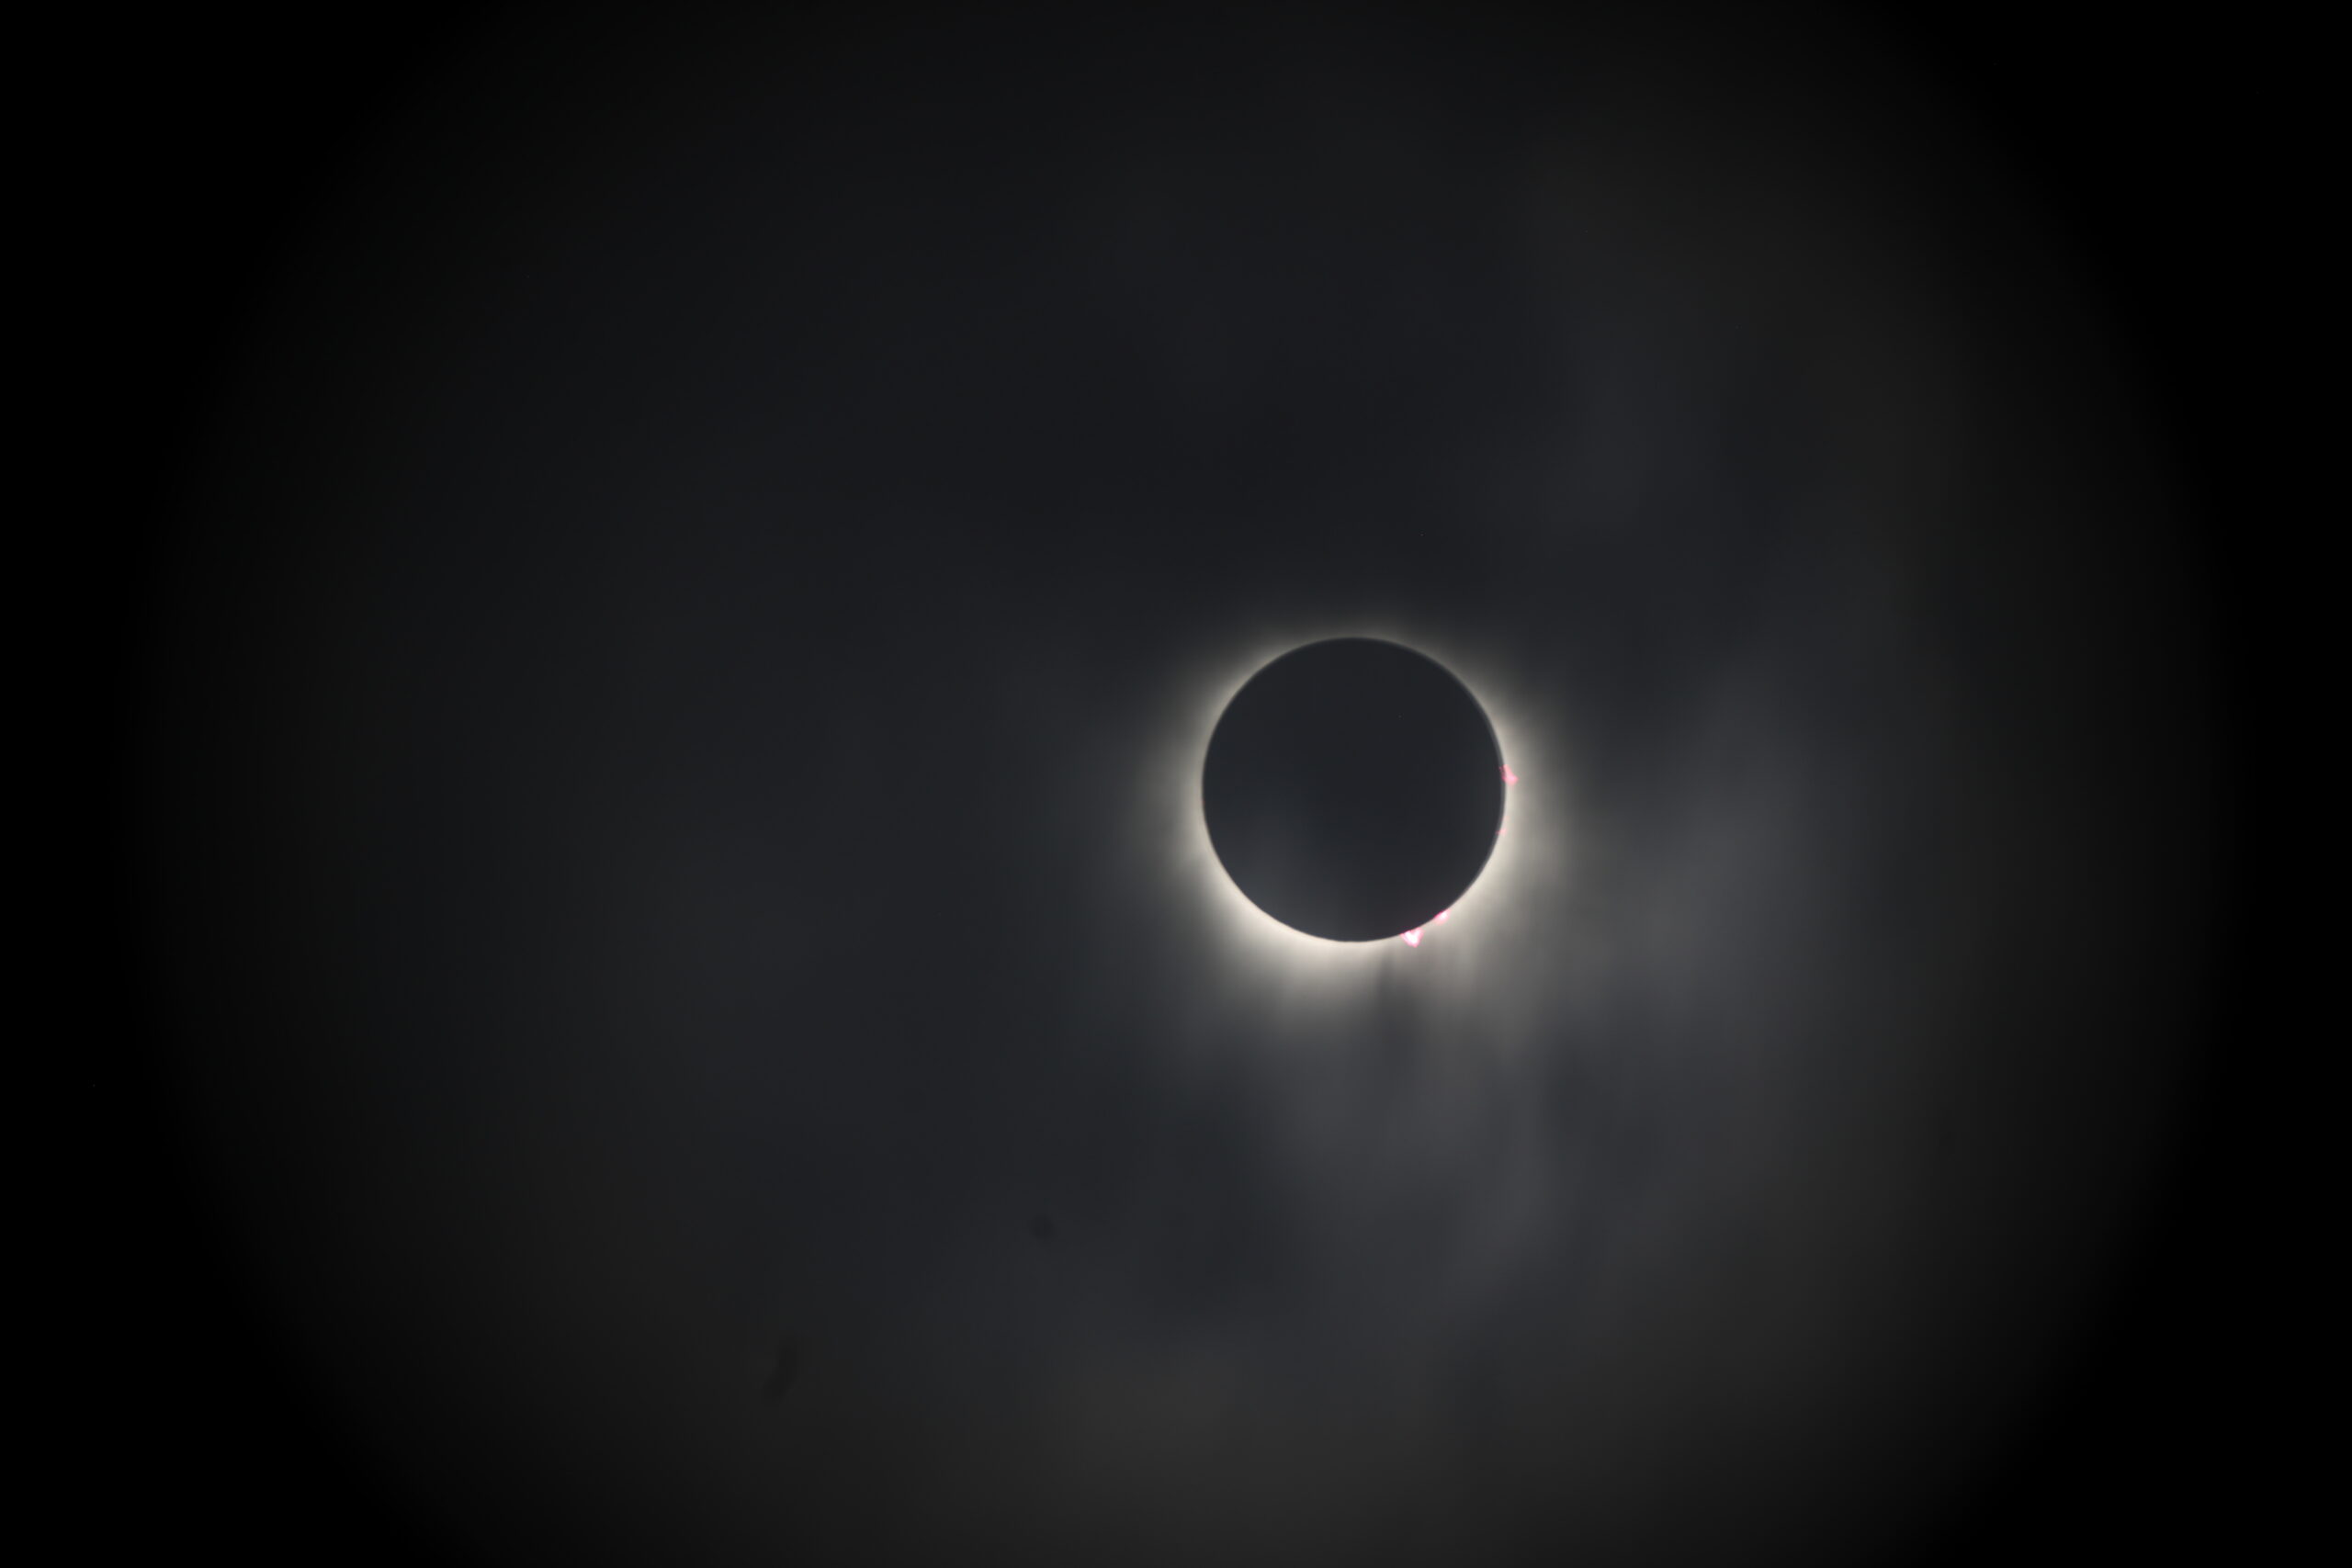 Total Solar Eclipse